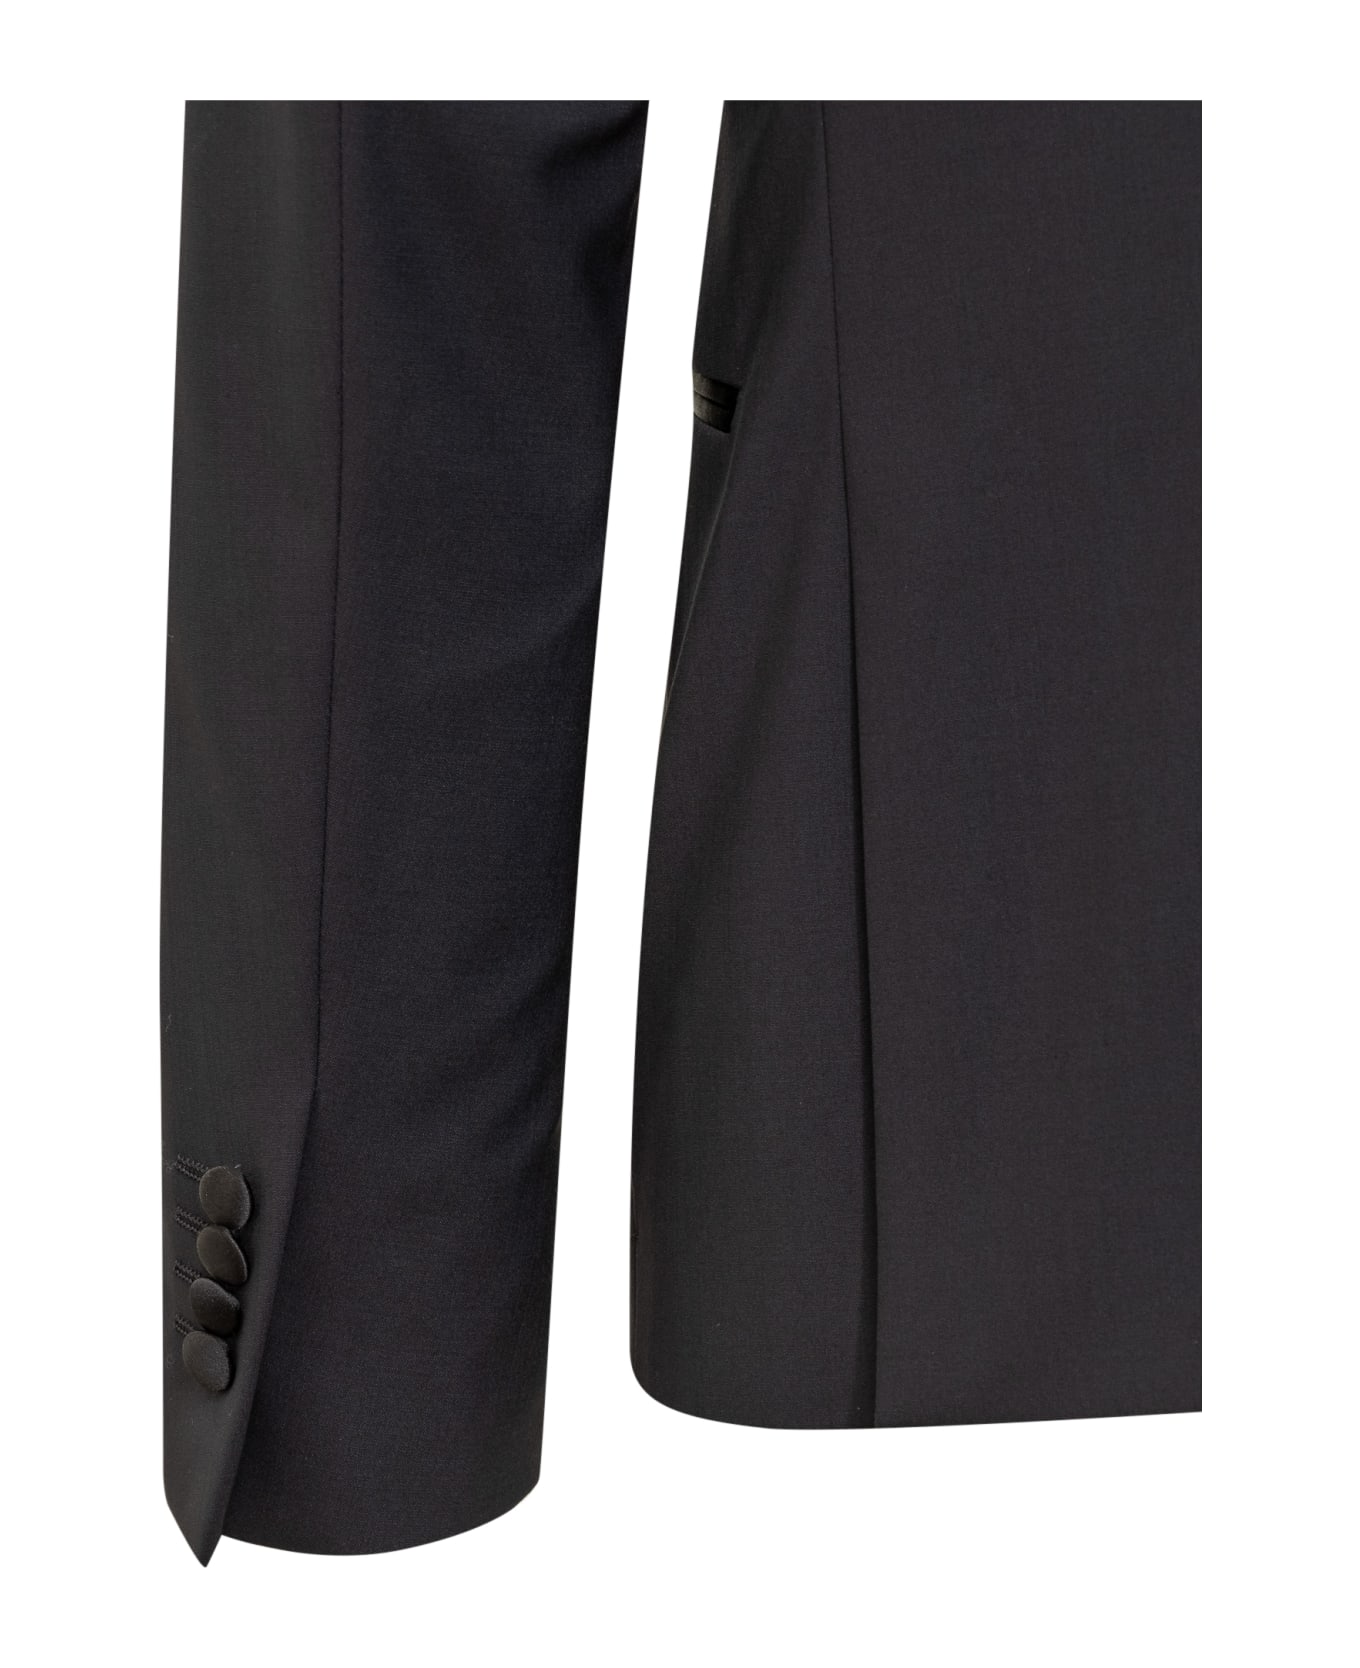 Emporio Armani Two Piece Tuxedo Suit - BLU NAVY スーツ